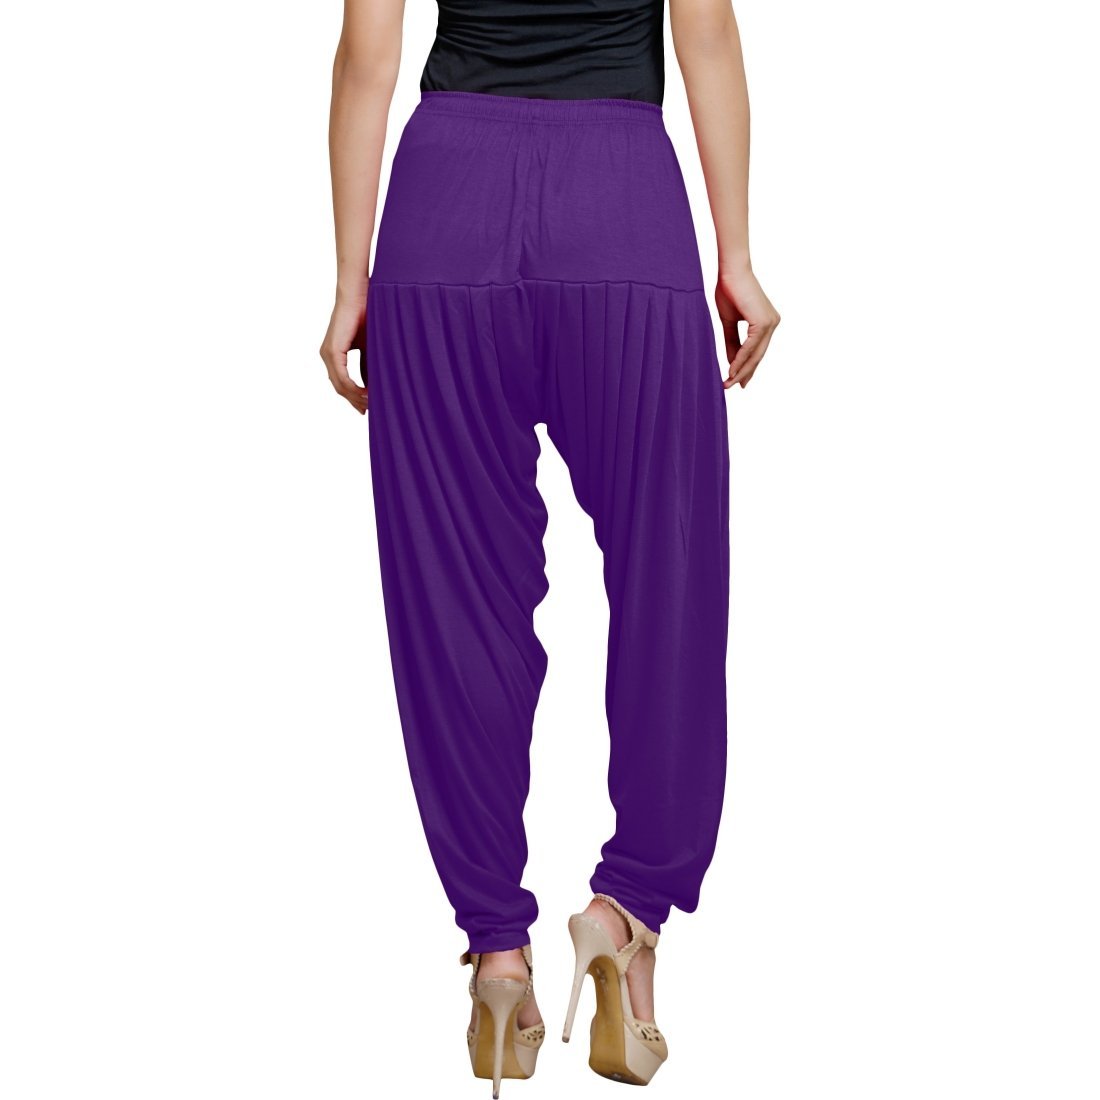 Stylesindia Women's Cotton Lycra Patiala Pant for Workout Yoga Pant (Cotton Lycra, Voilet)